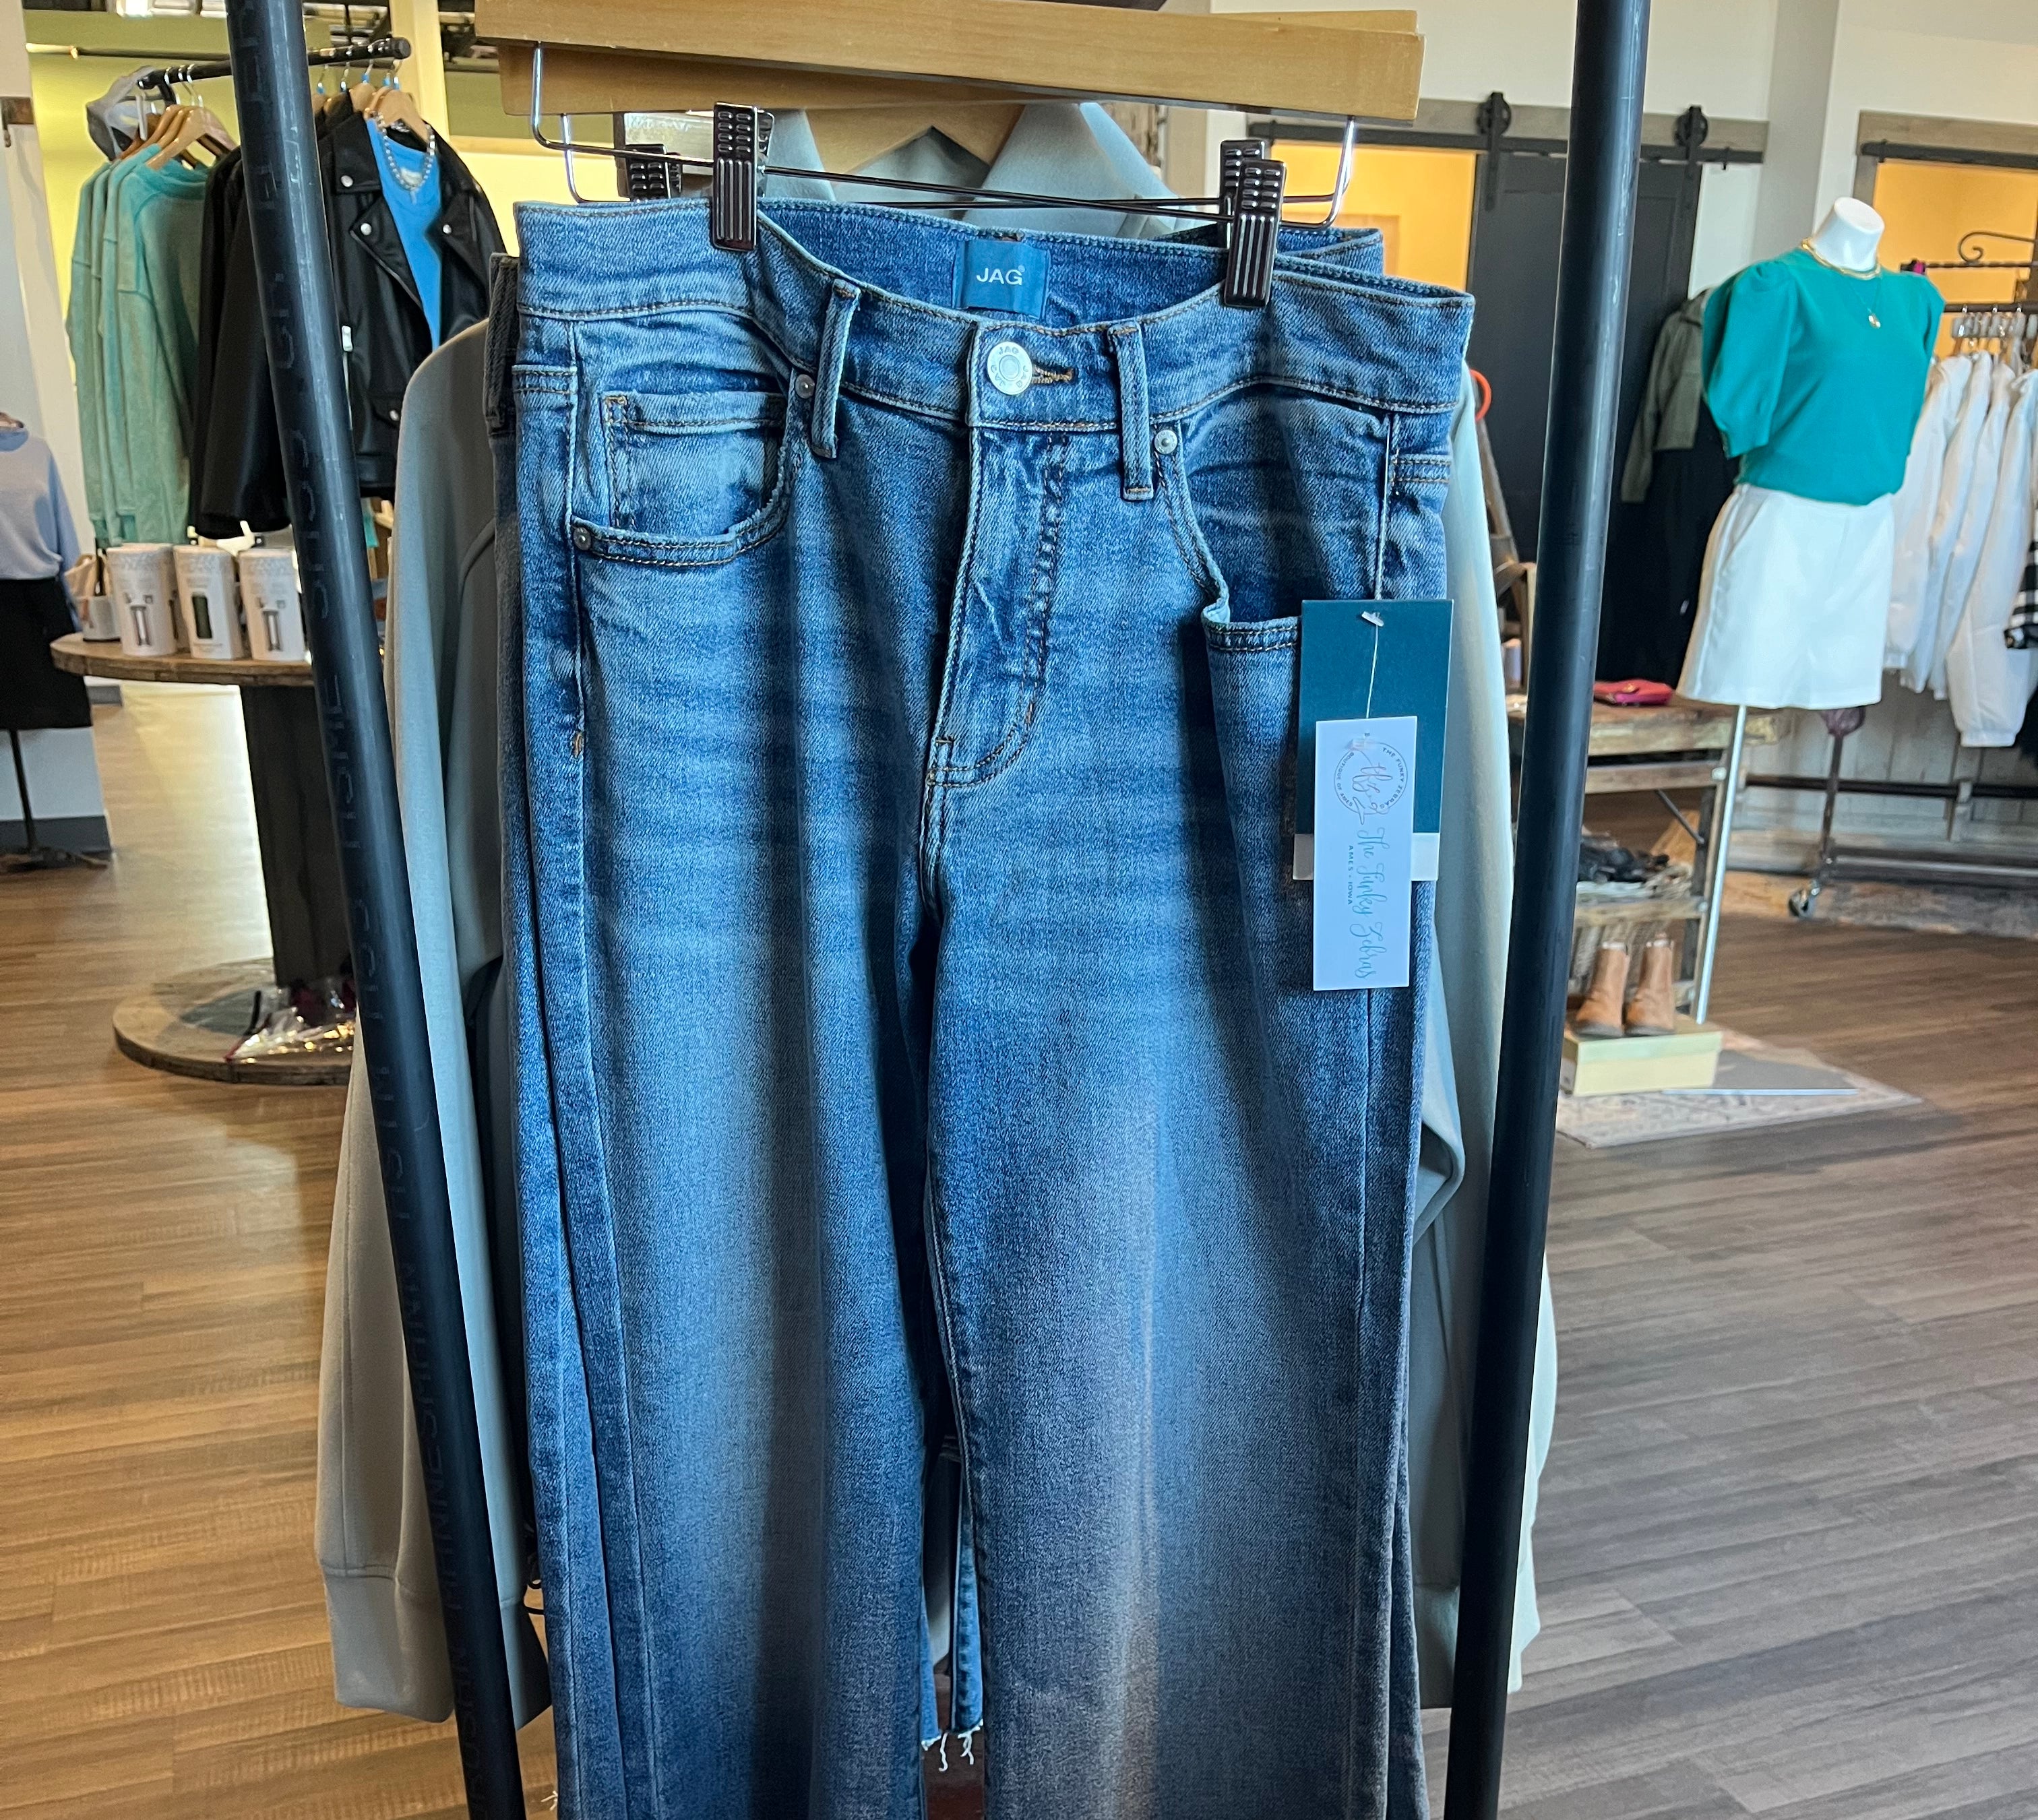 Kait Jeans-Jeans-Jag-The Funky Zebra Ames, Women's Fashion Boutique in Ames, Iowa